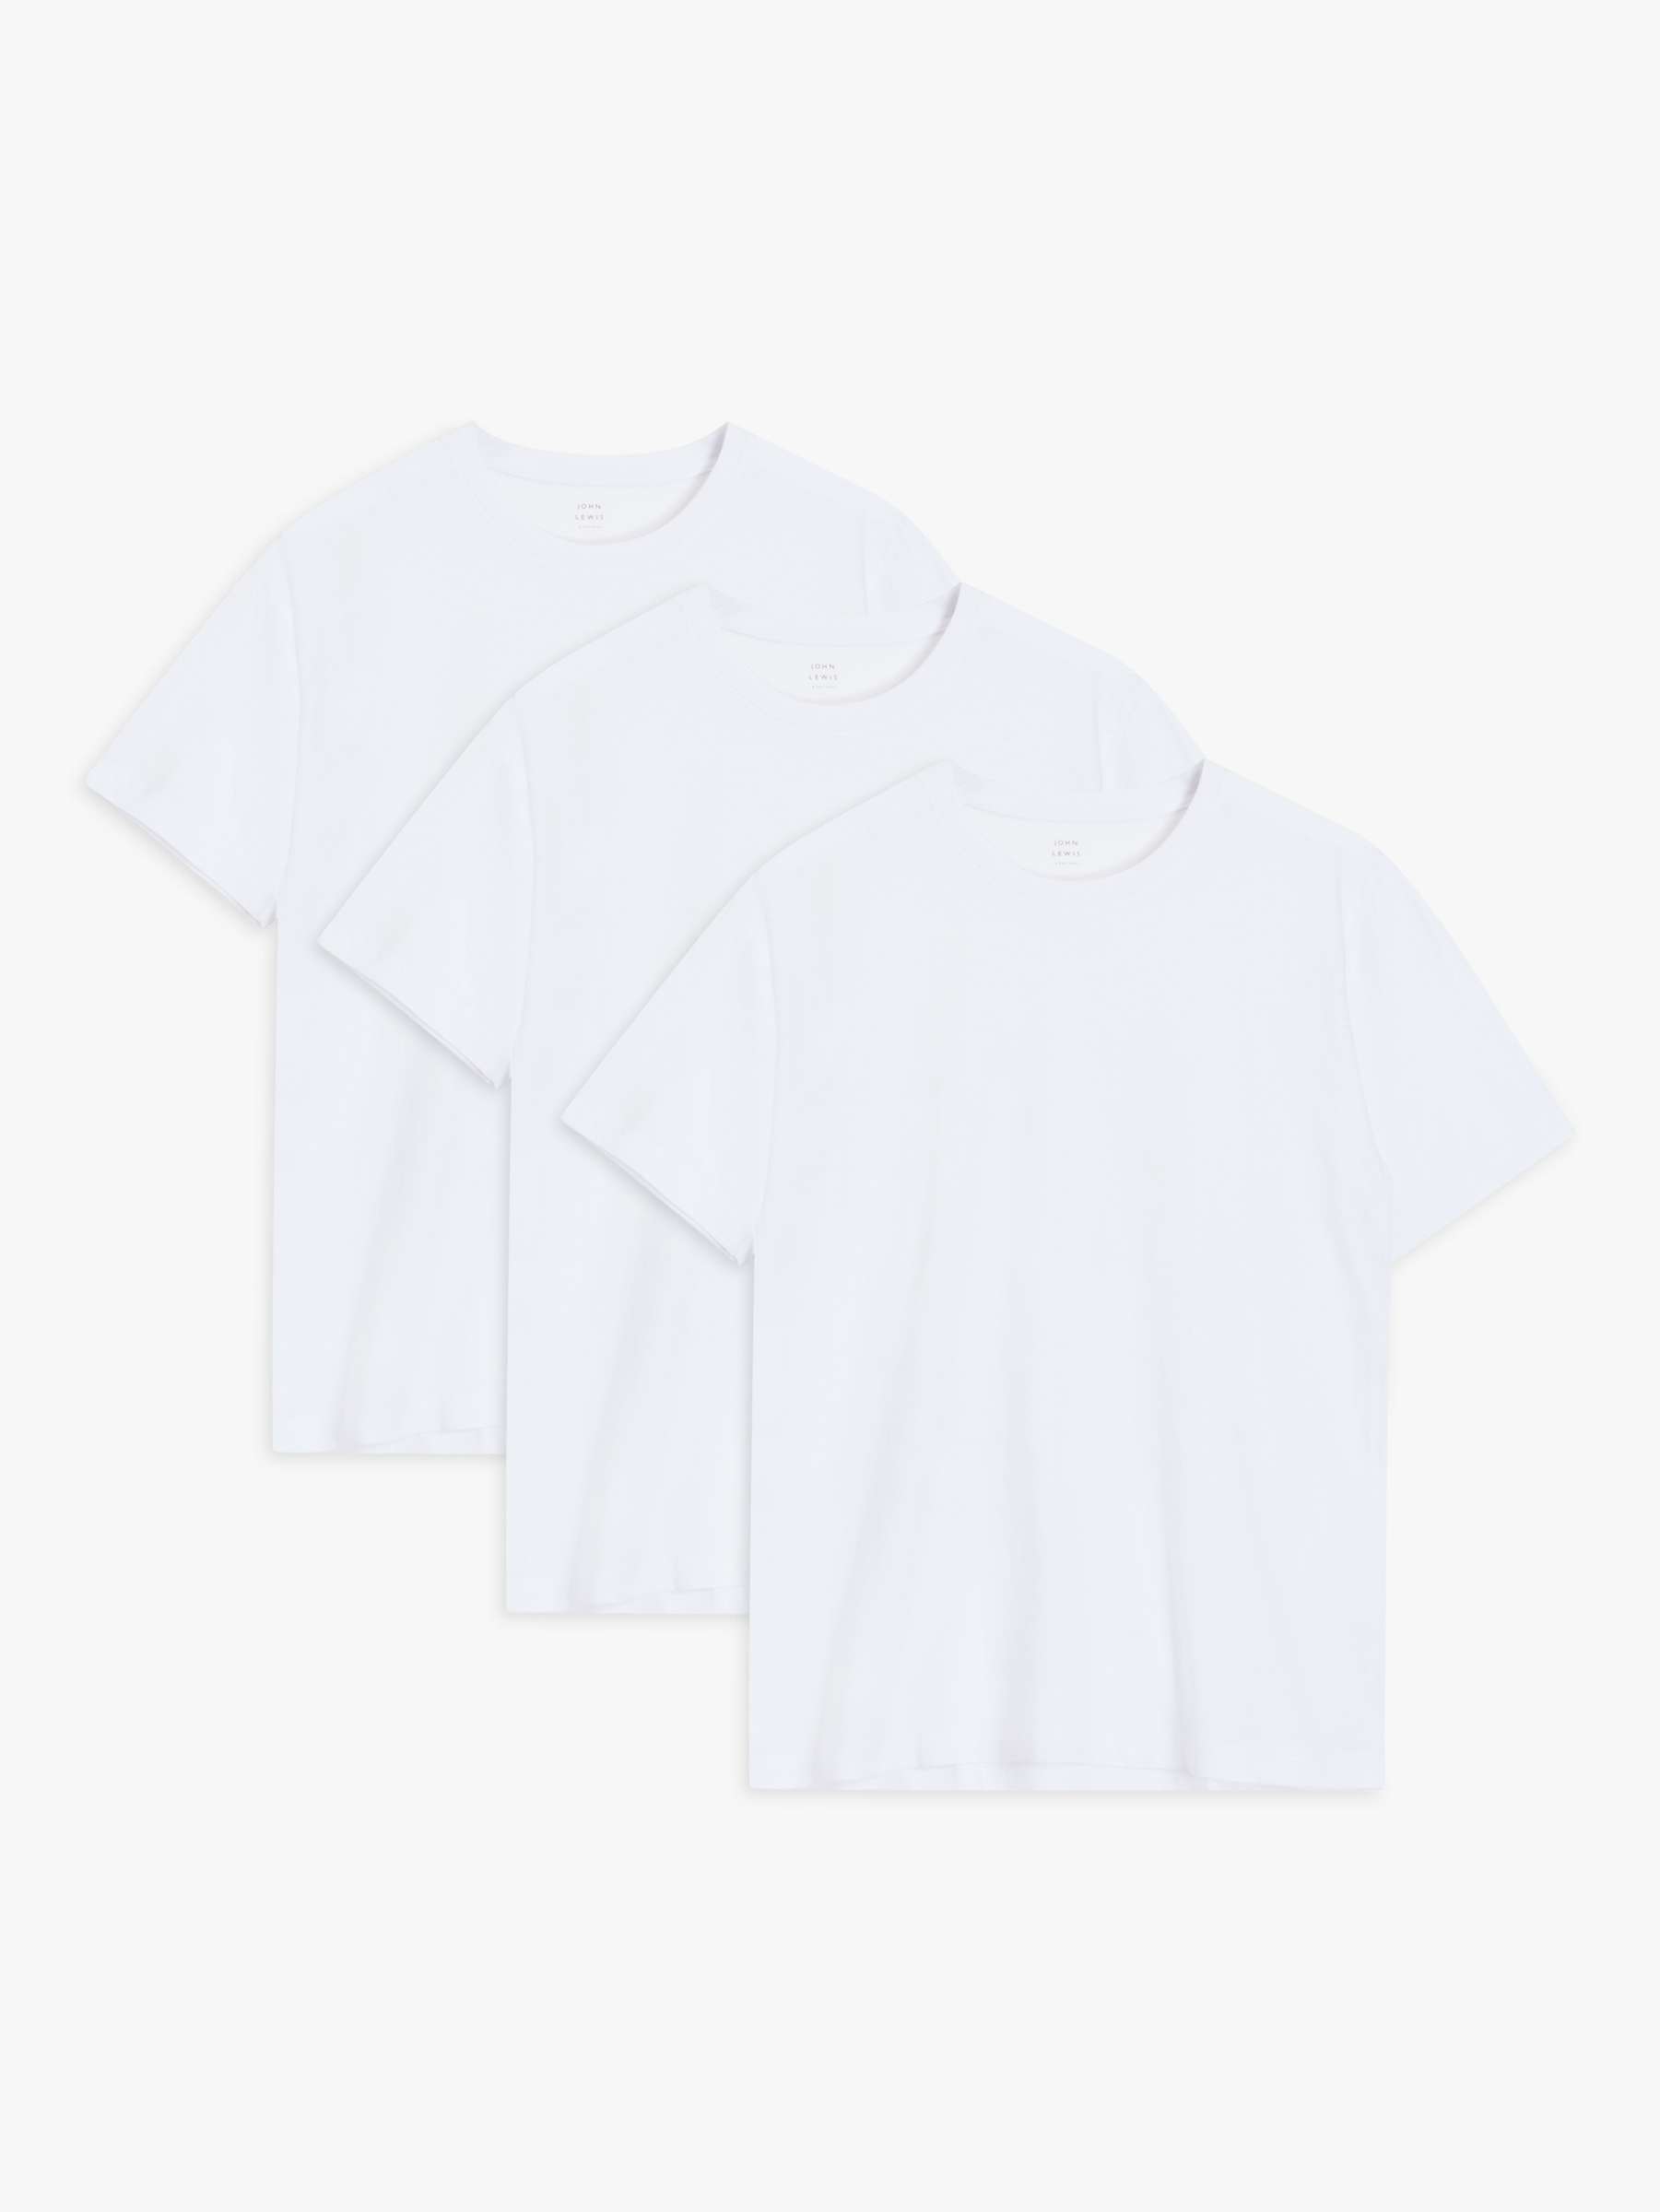 Buy John Lewis Cotton T-Shirt, Pack of 3 Online at johnlewis.com